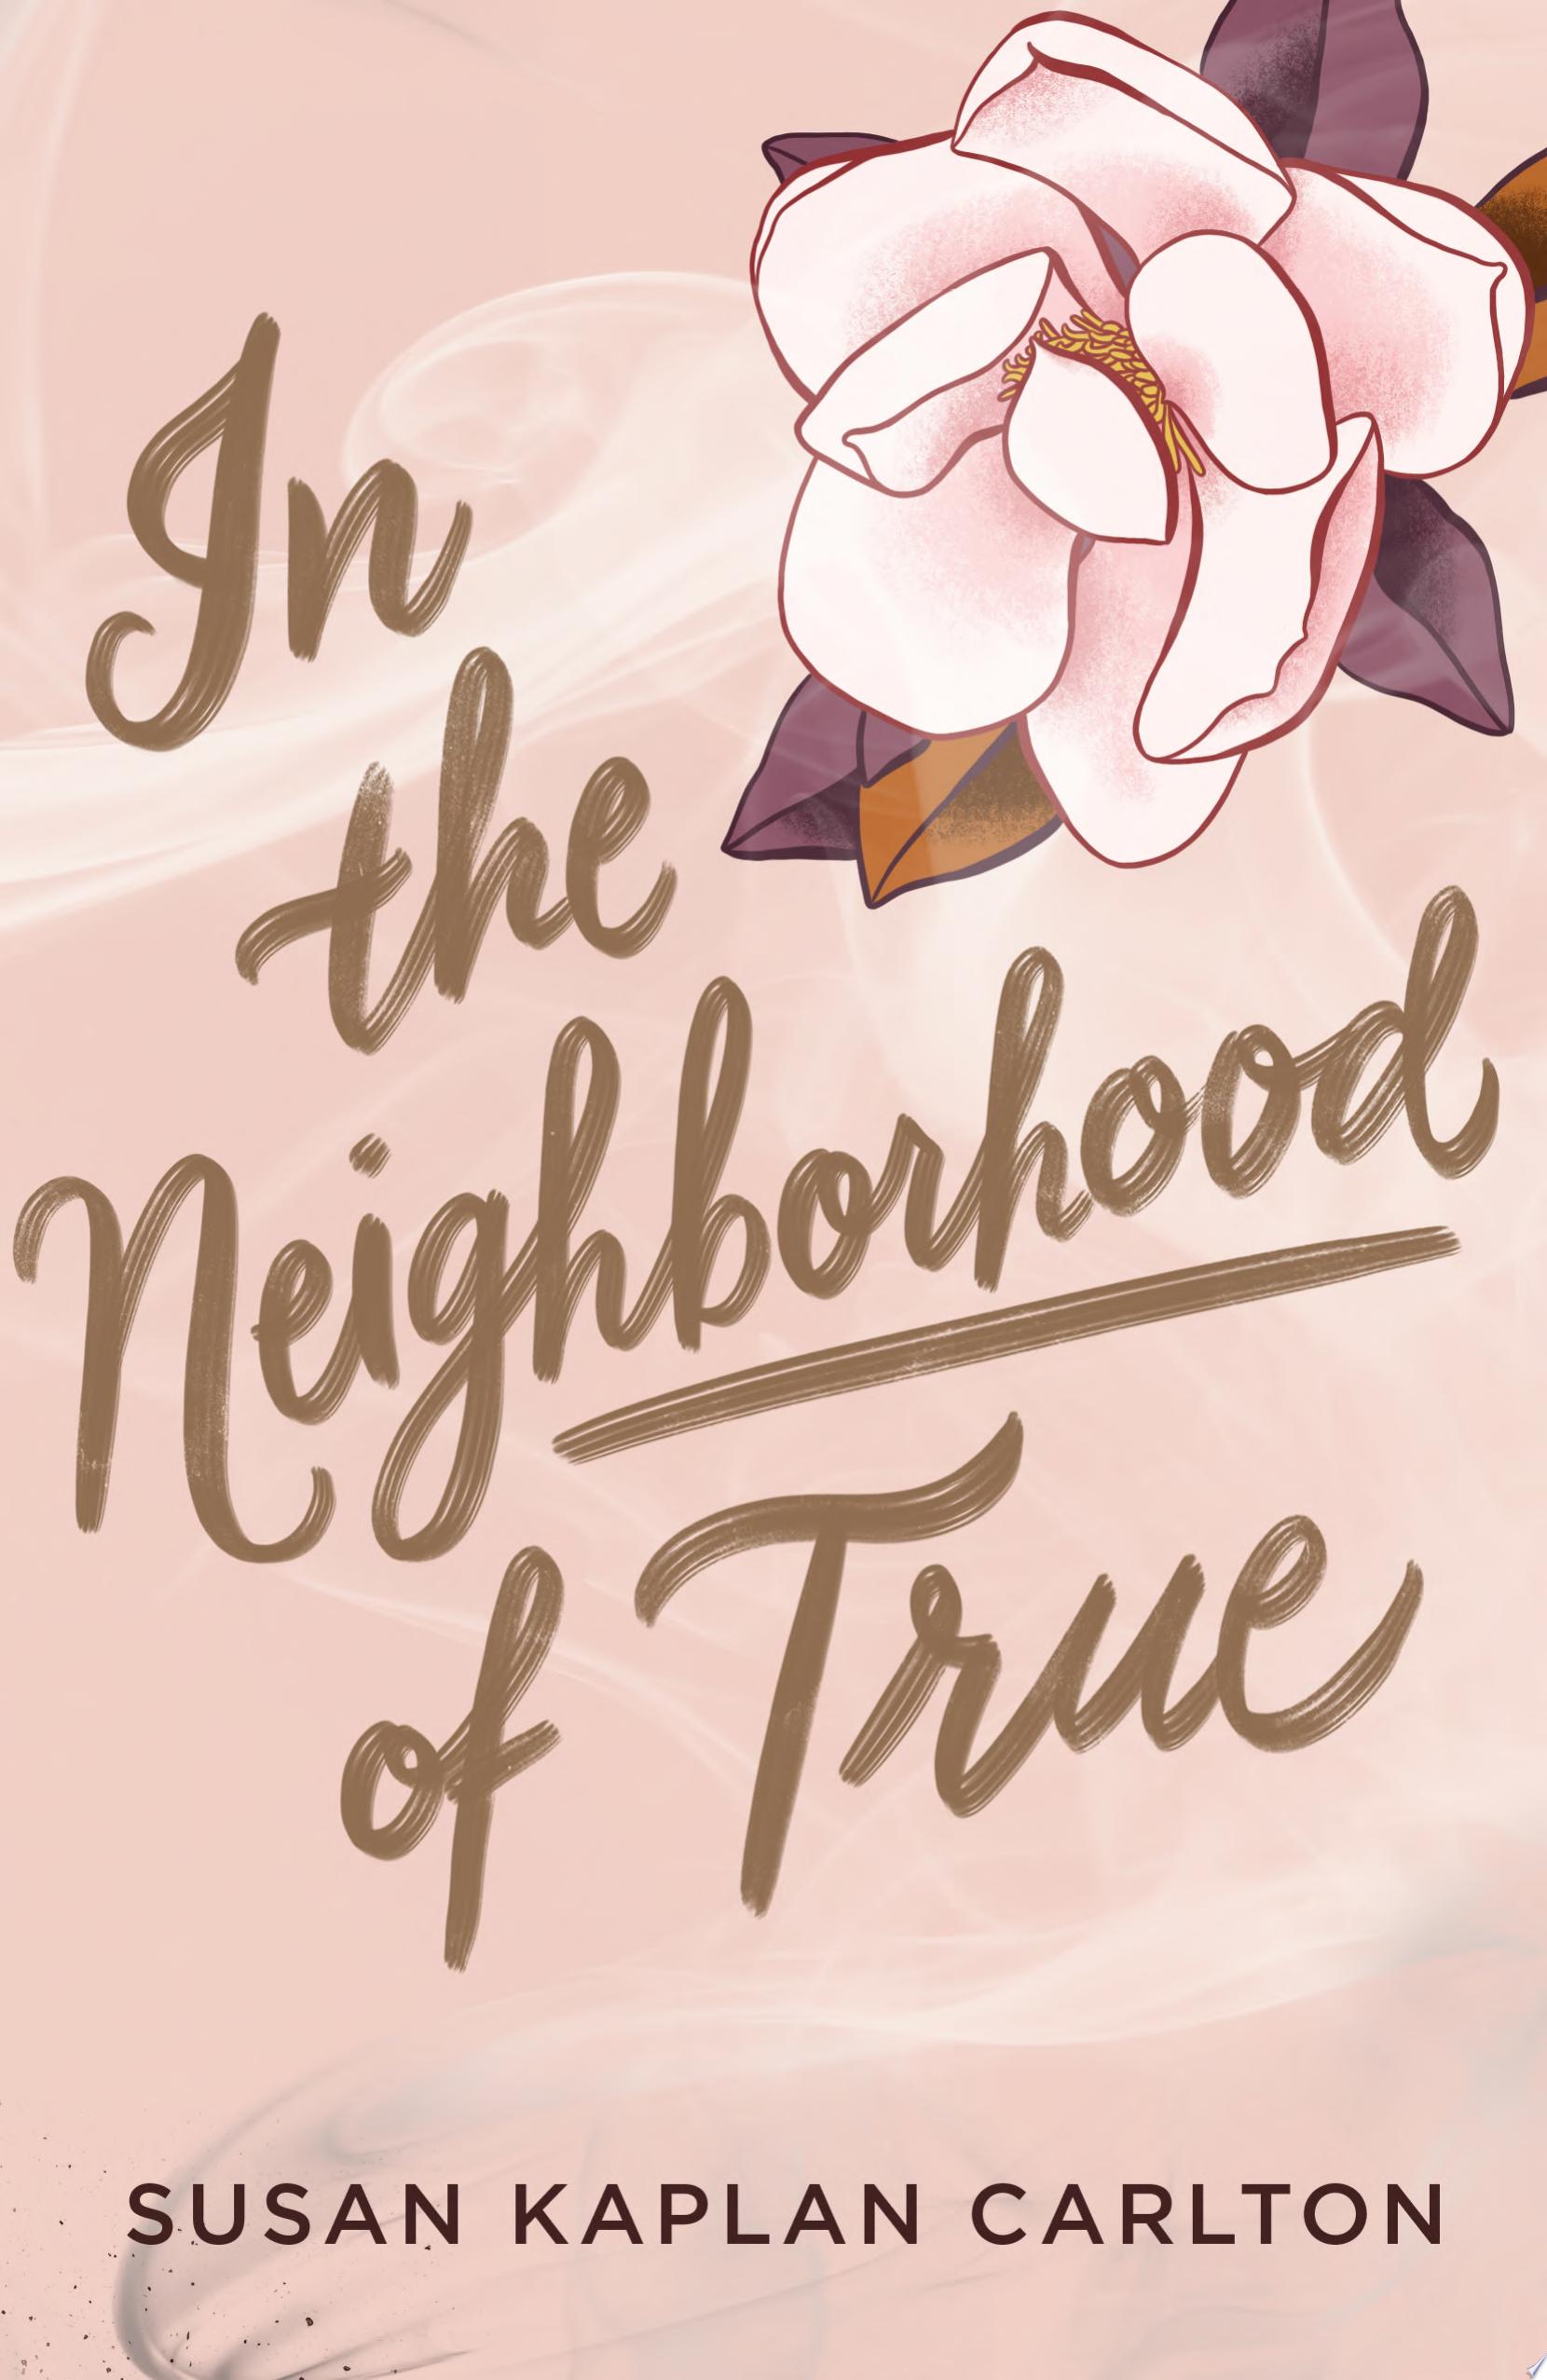 Image for "In the Neighborhood of True"